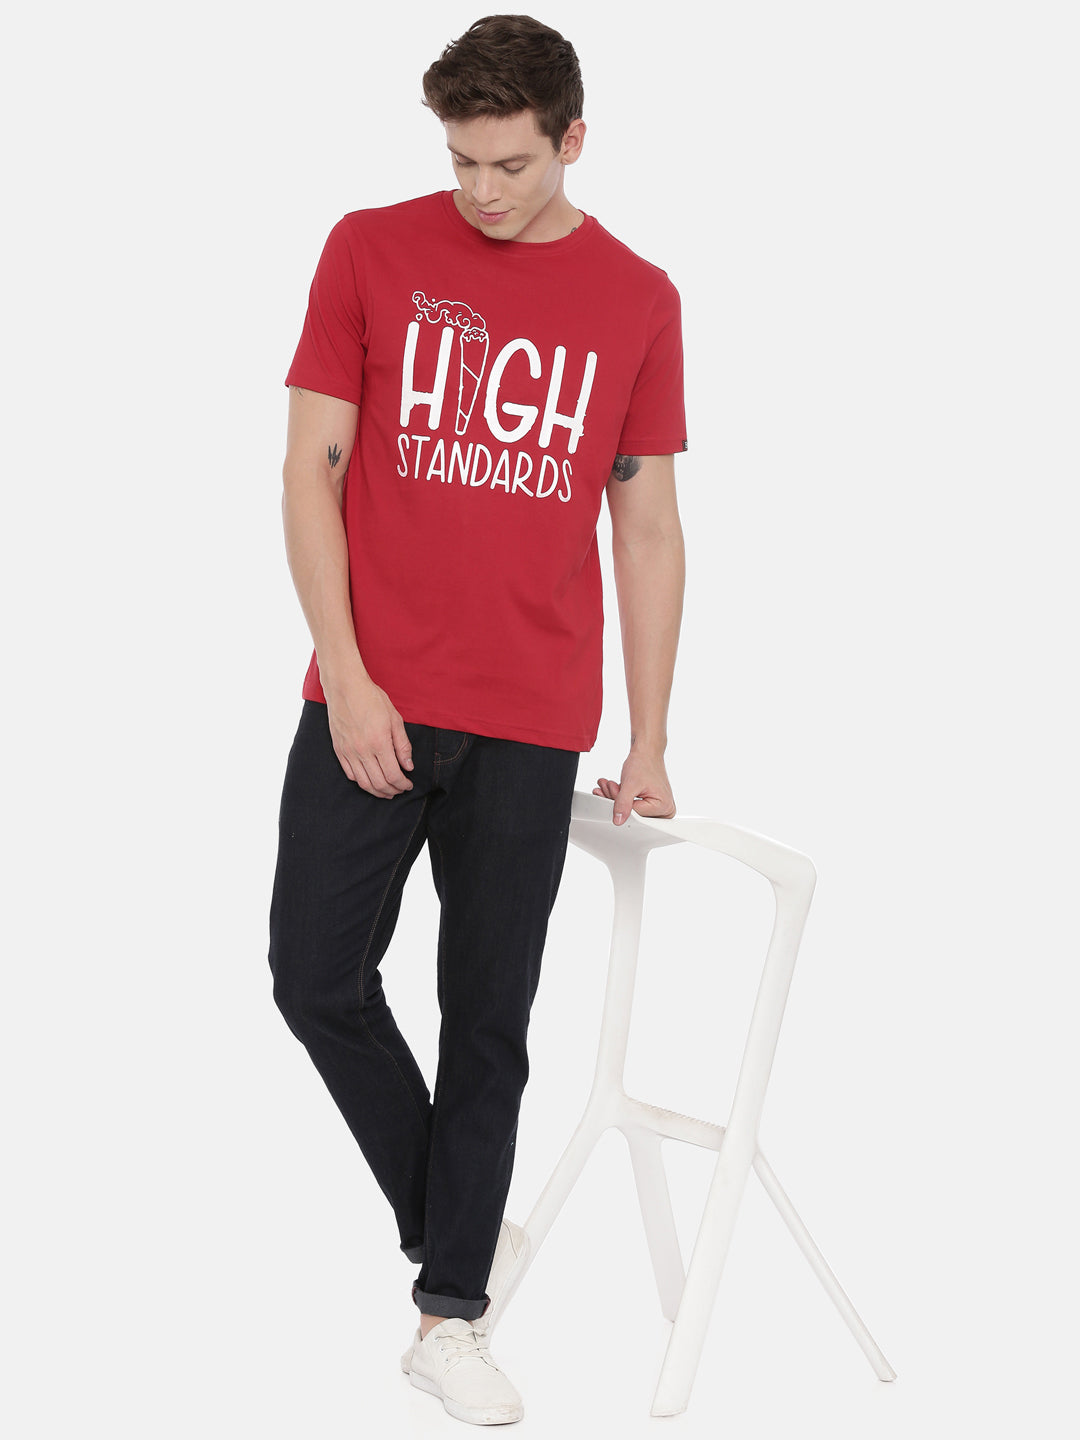 High Standard T-Shirt Graphic T-Shirts Bushirt   